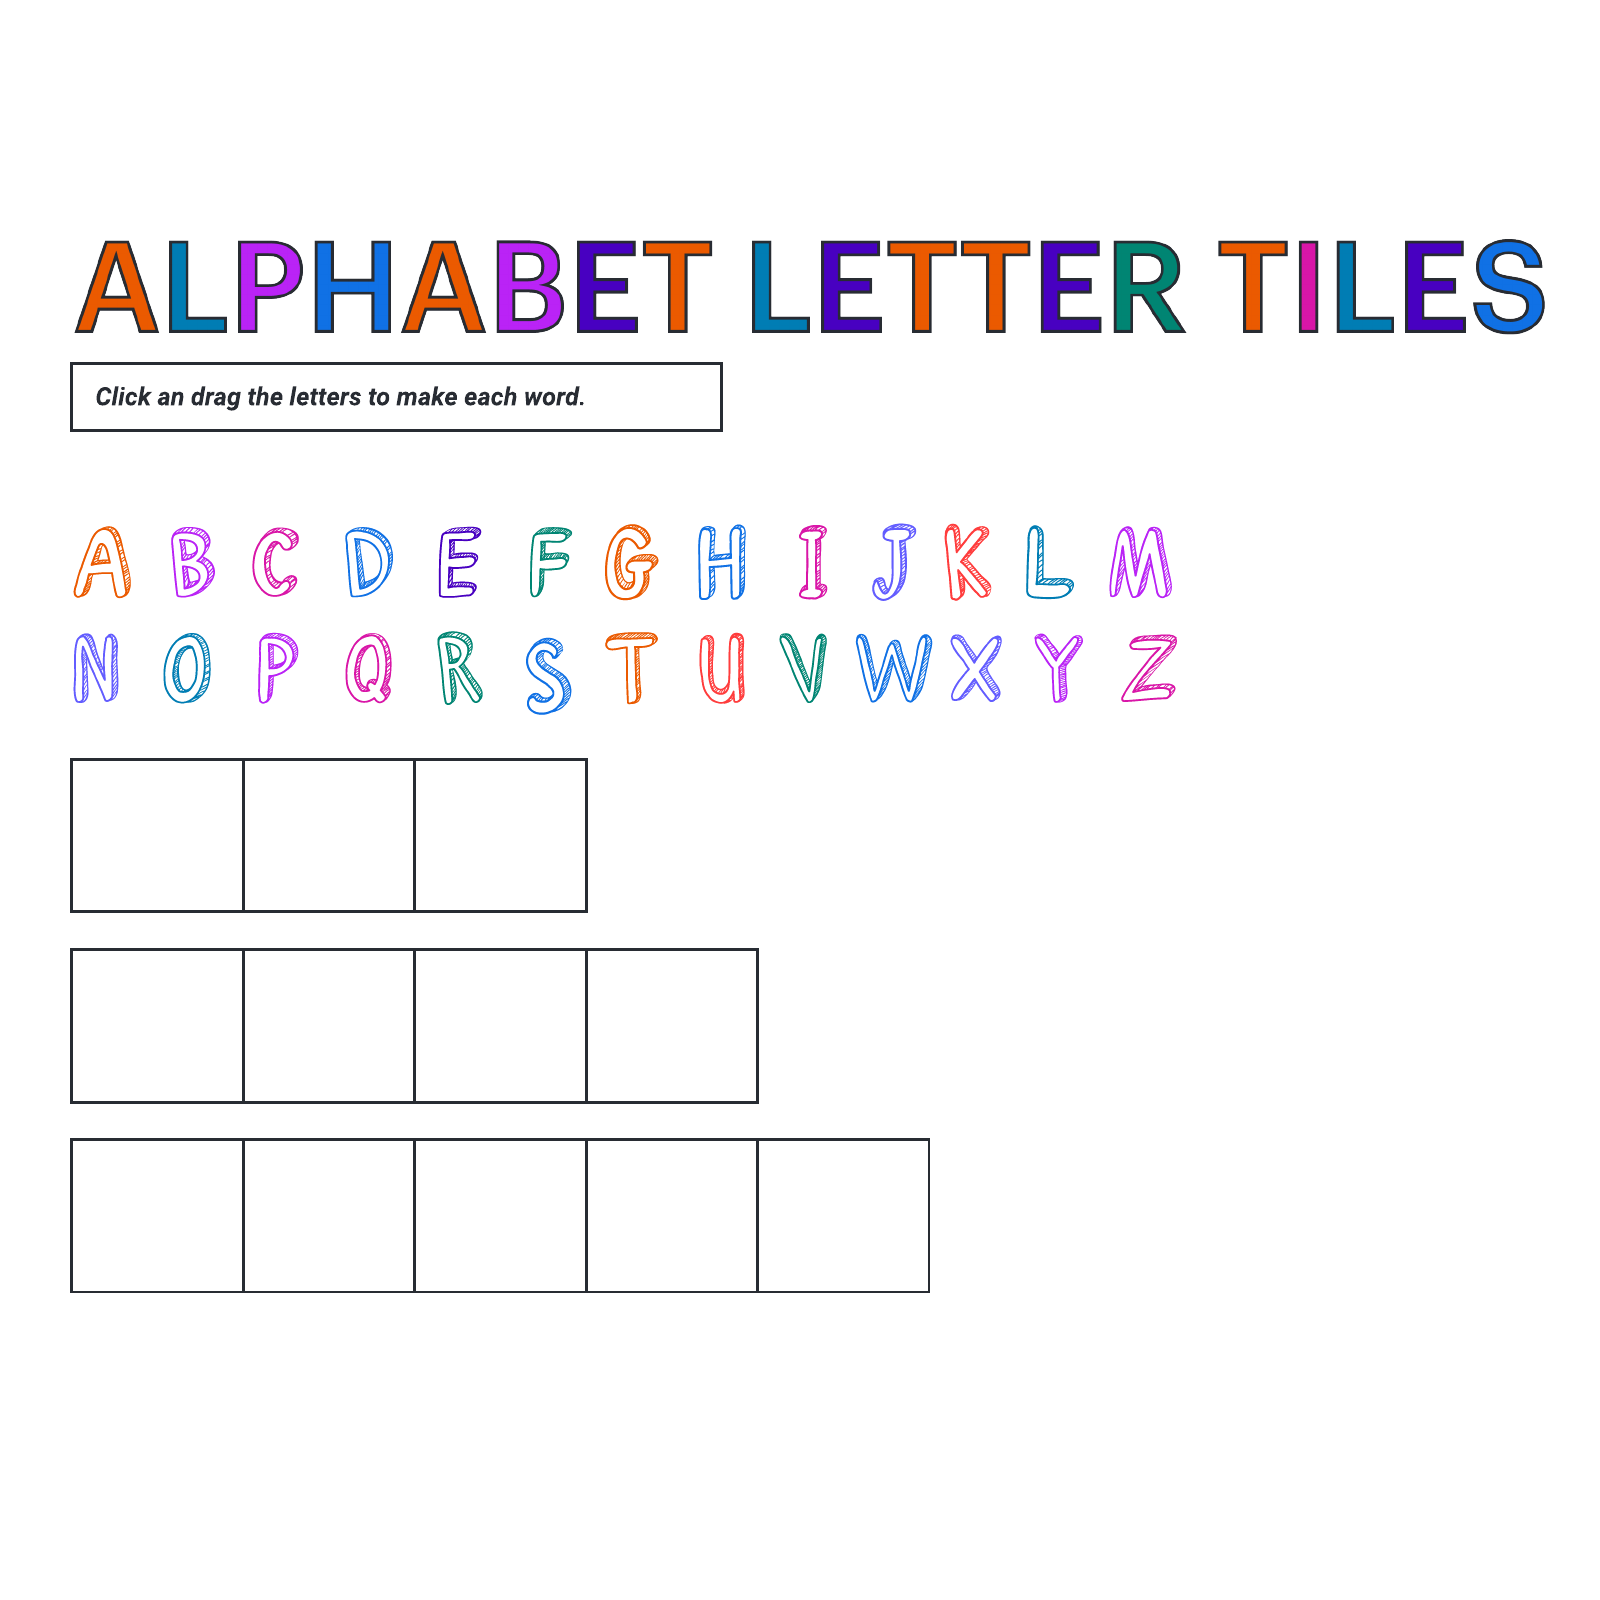 Alphabet letter tiles example